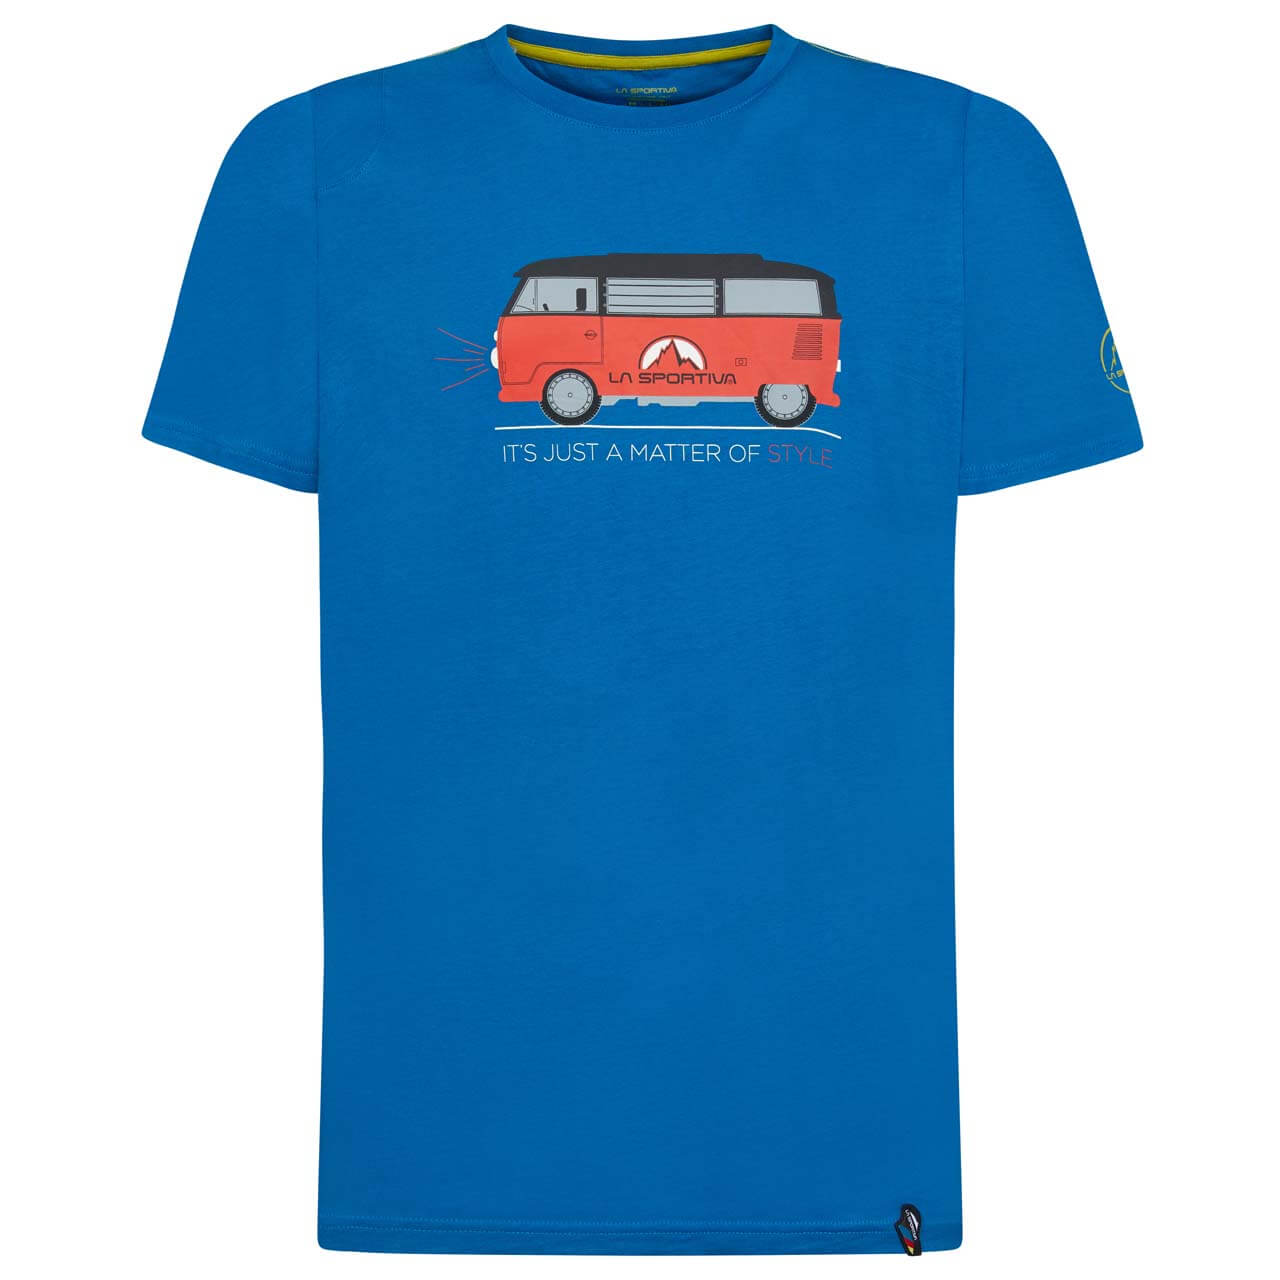 La Sportiva T-Shirt Van - Neptune, M